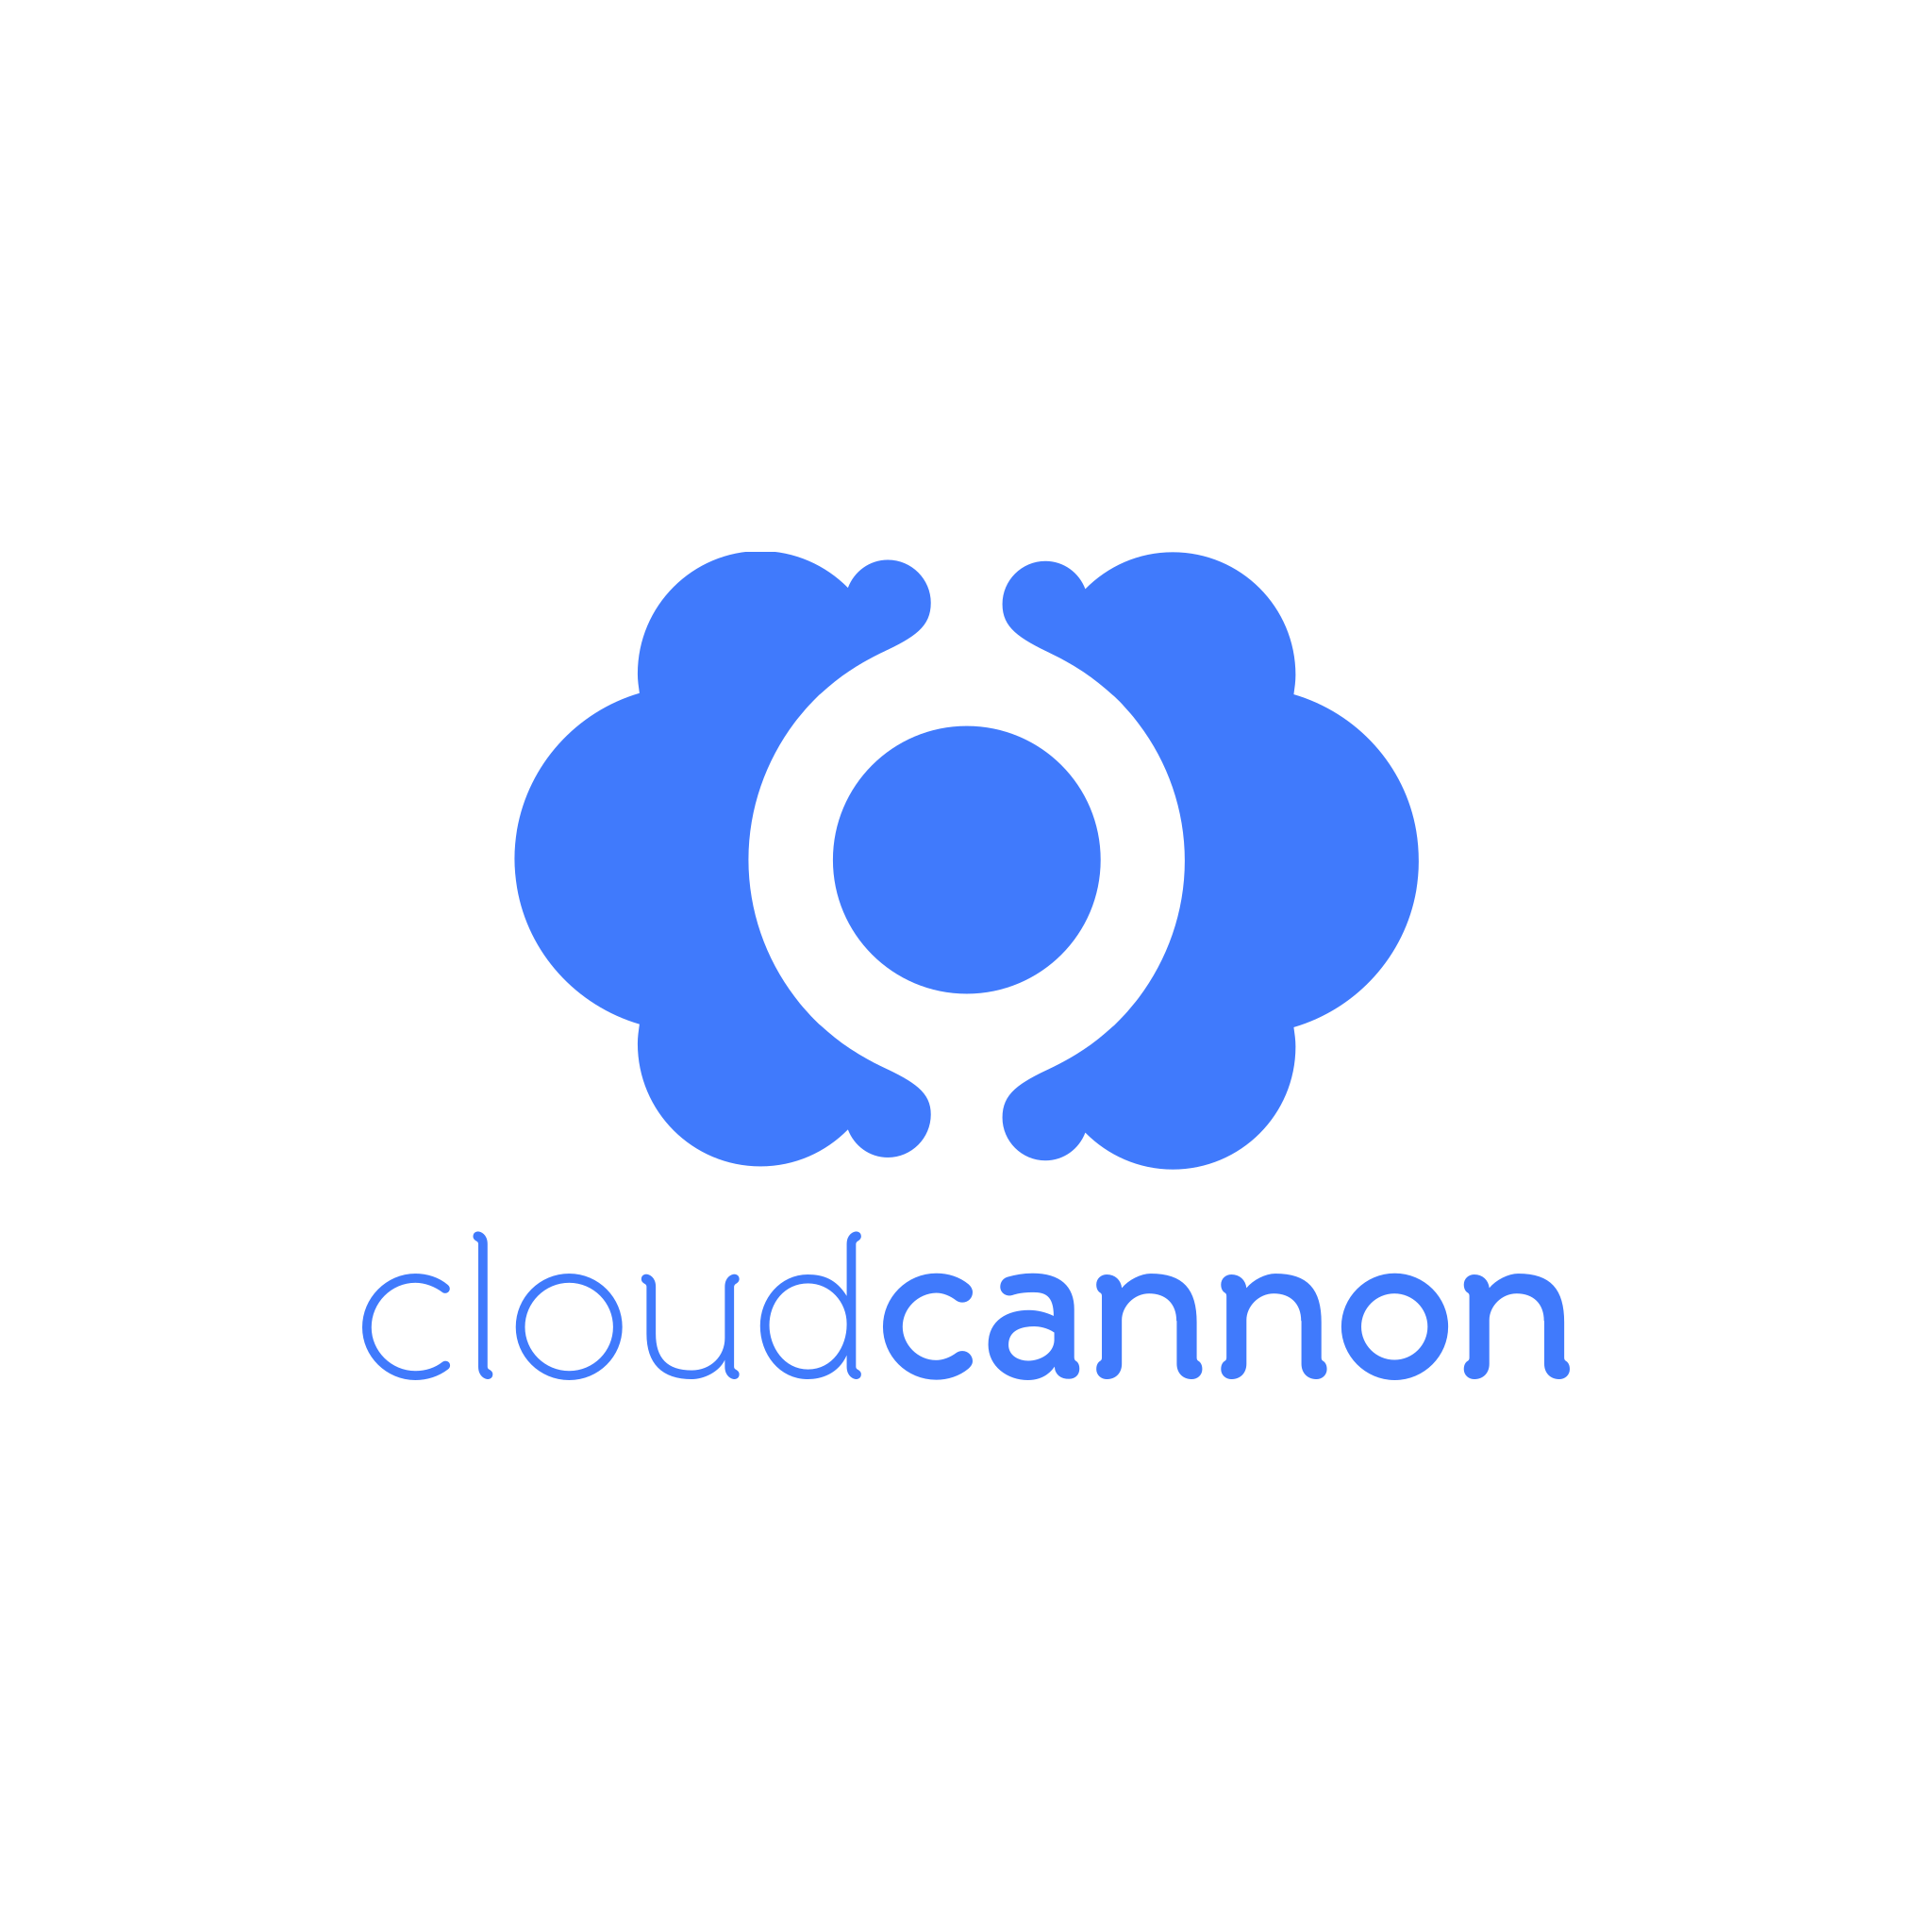 cloudcannon logo